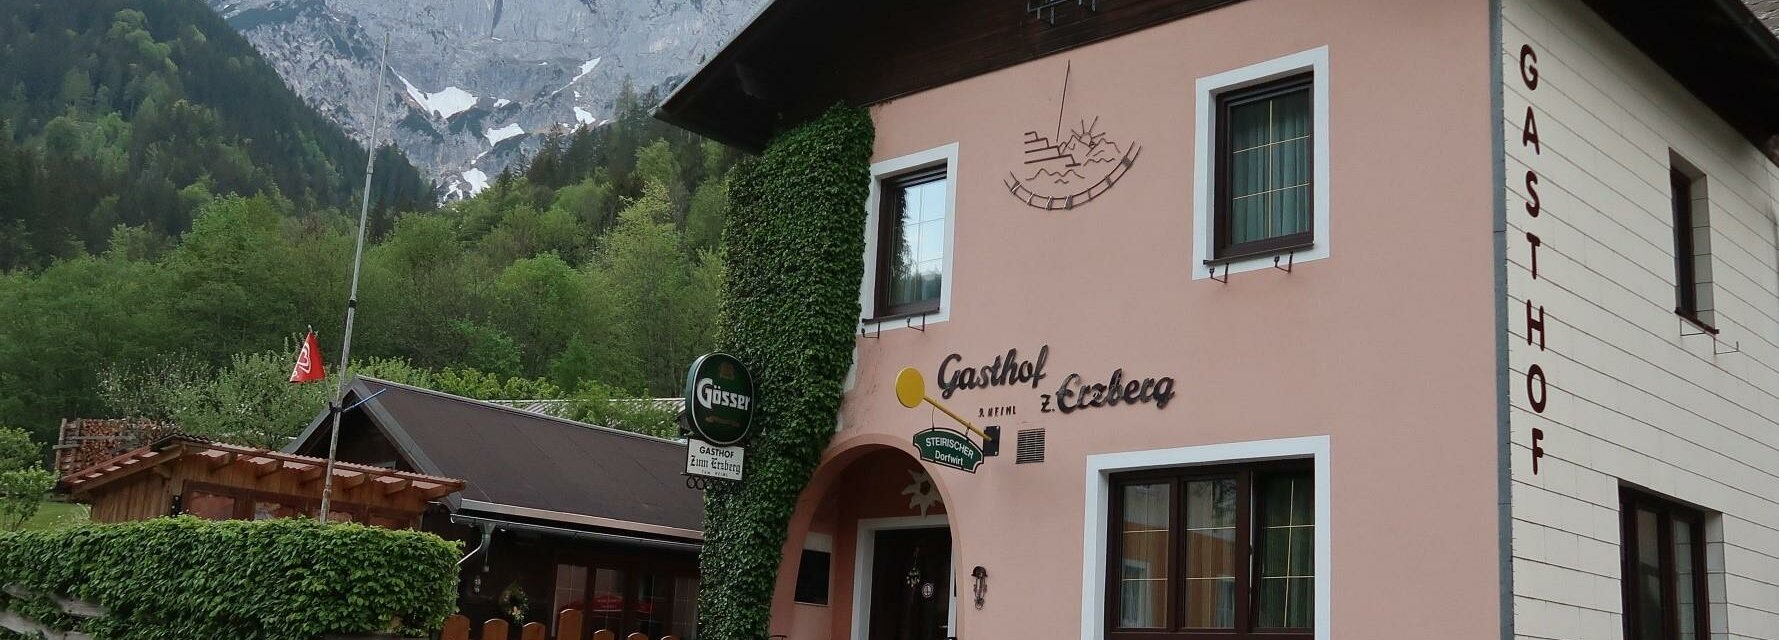 Gasthof zum Erzberg